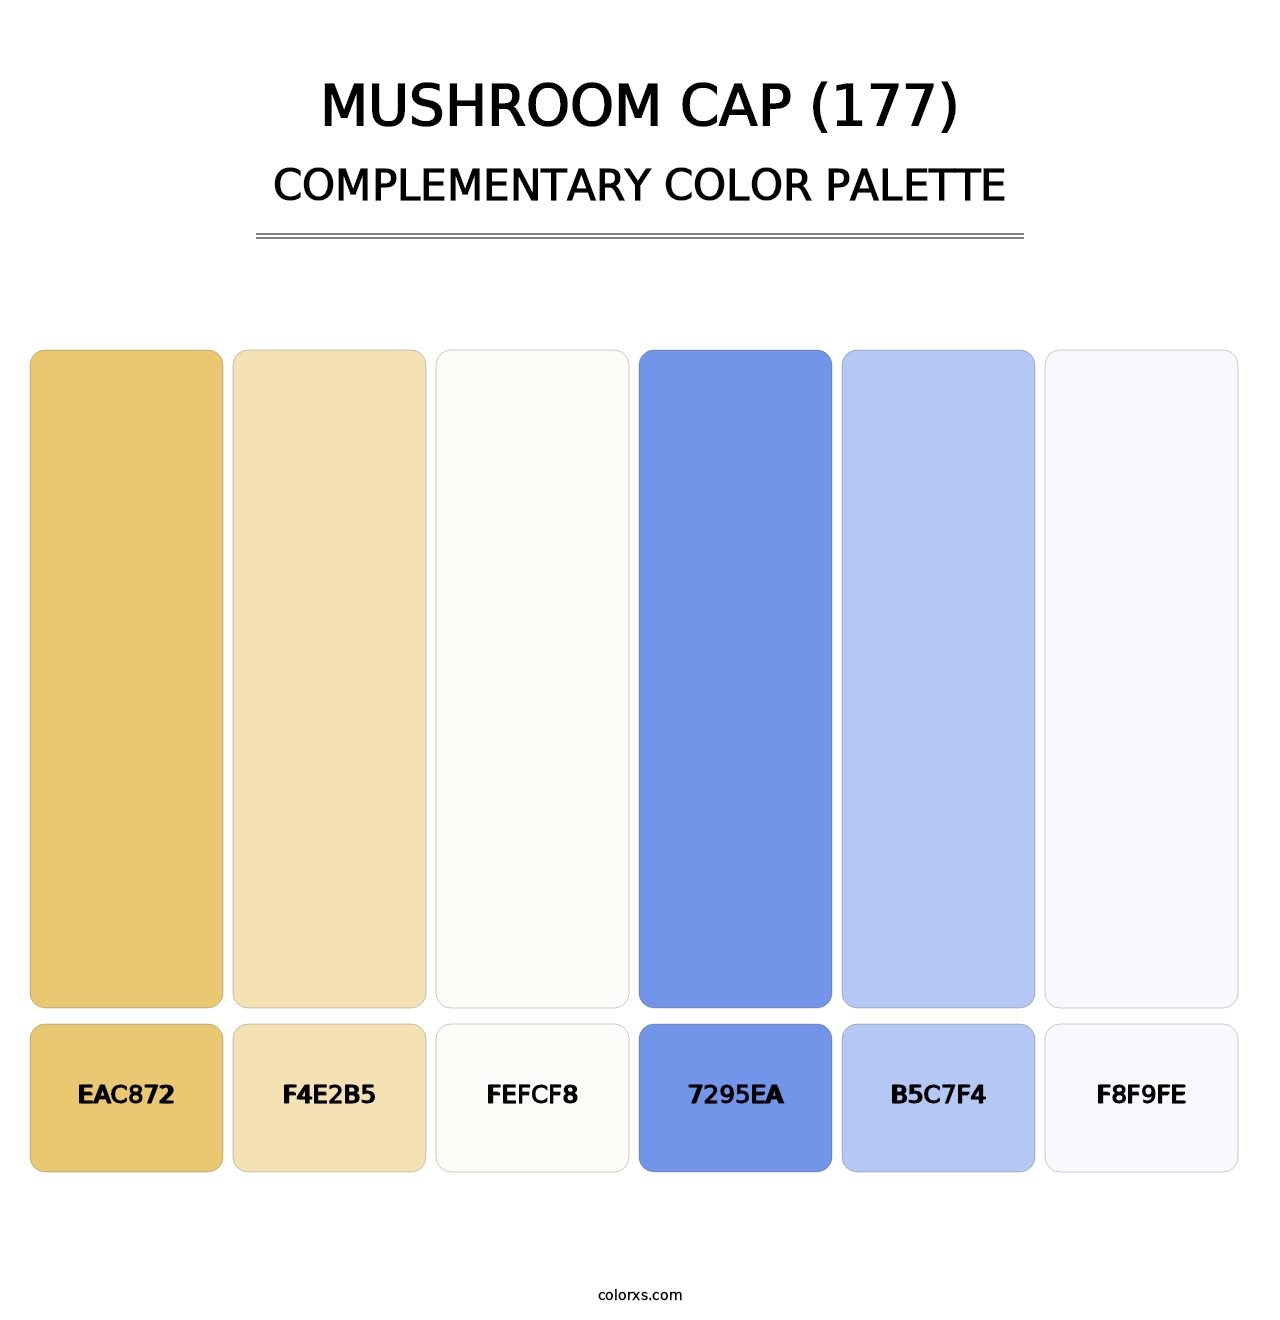 Mushroom Cap (177) - Complementary Color Palette